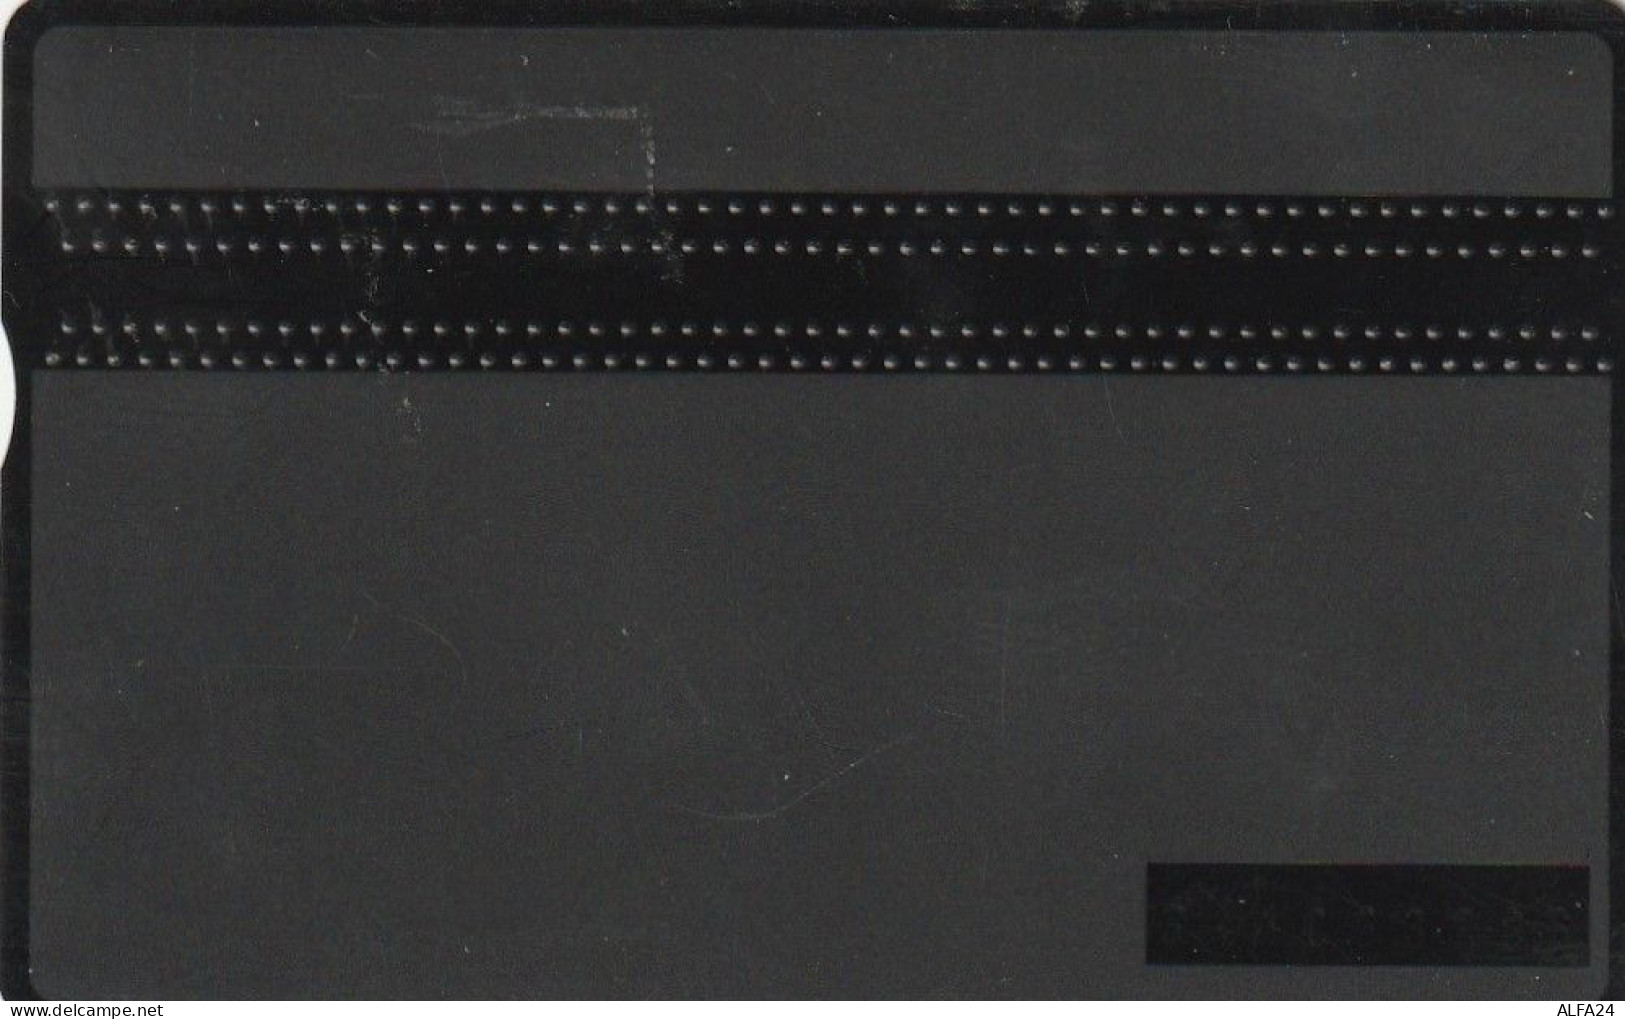 PHONE CARD BELGIO LG (CV6662 - Senza Chip